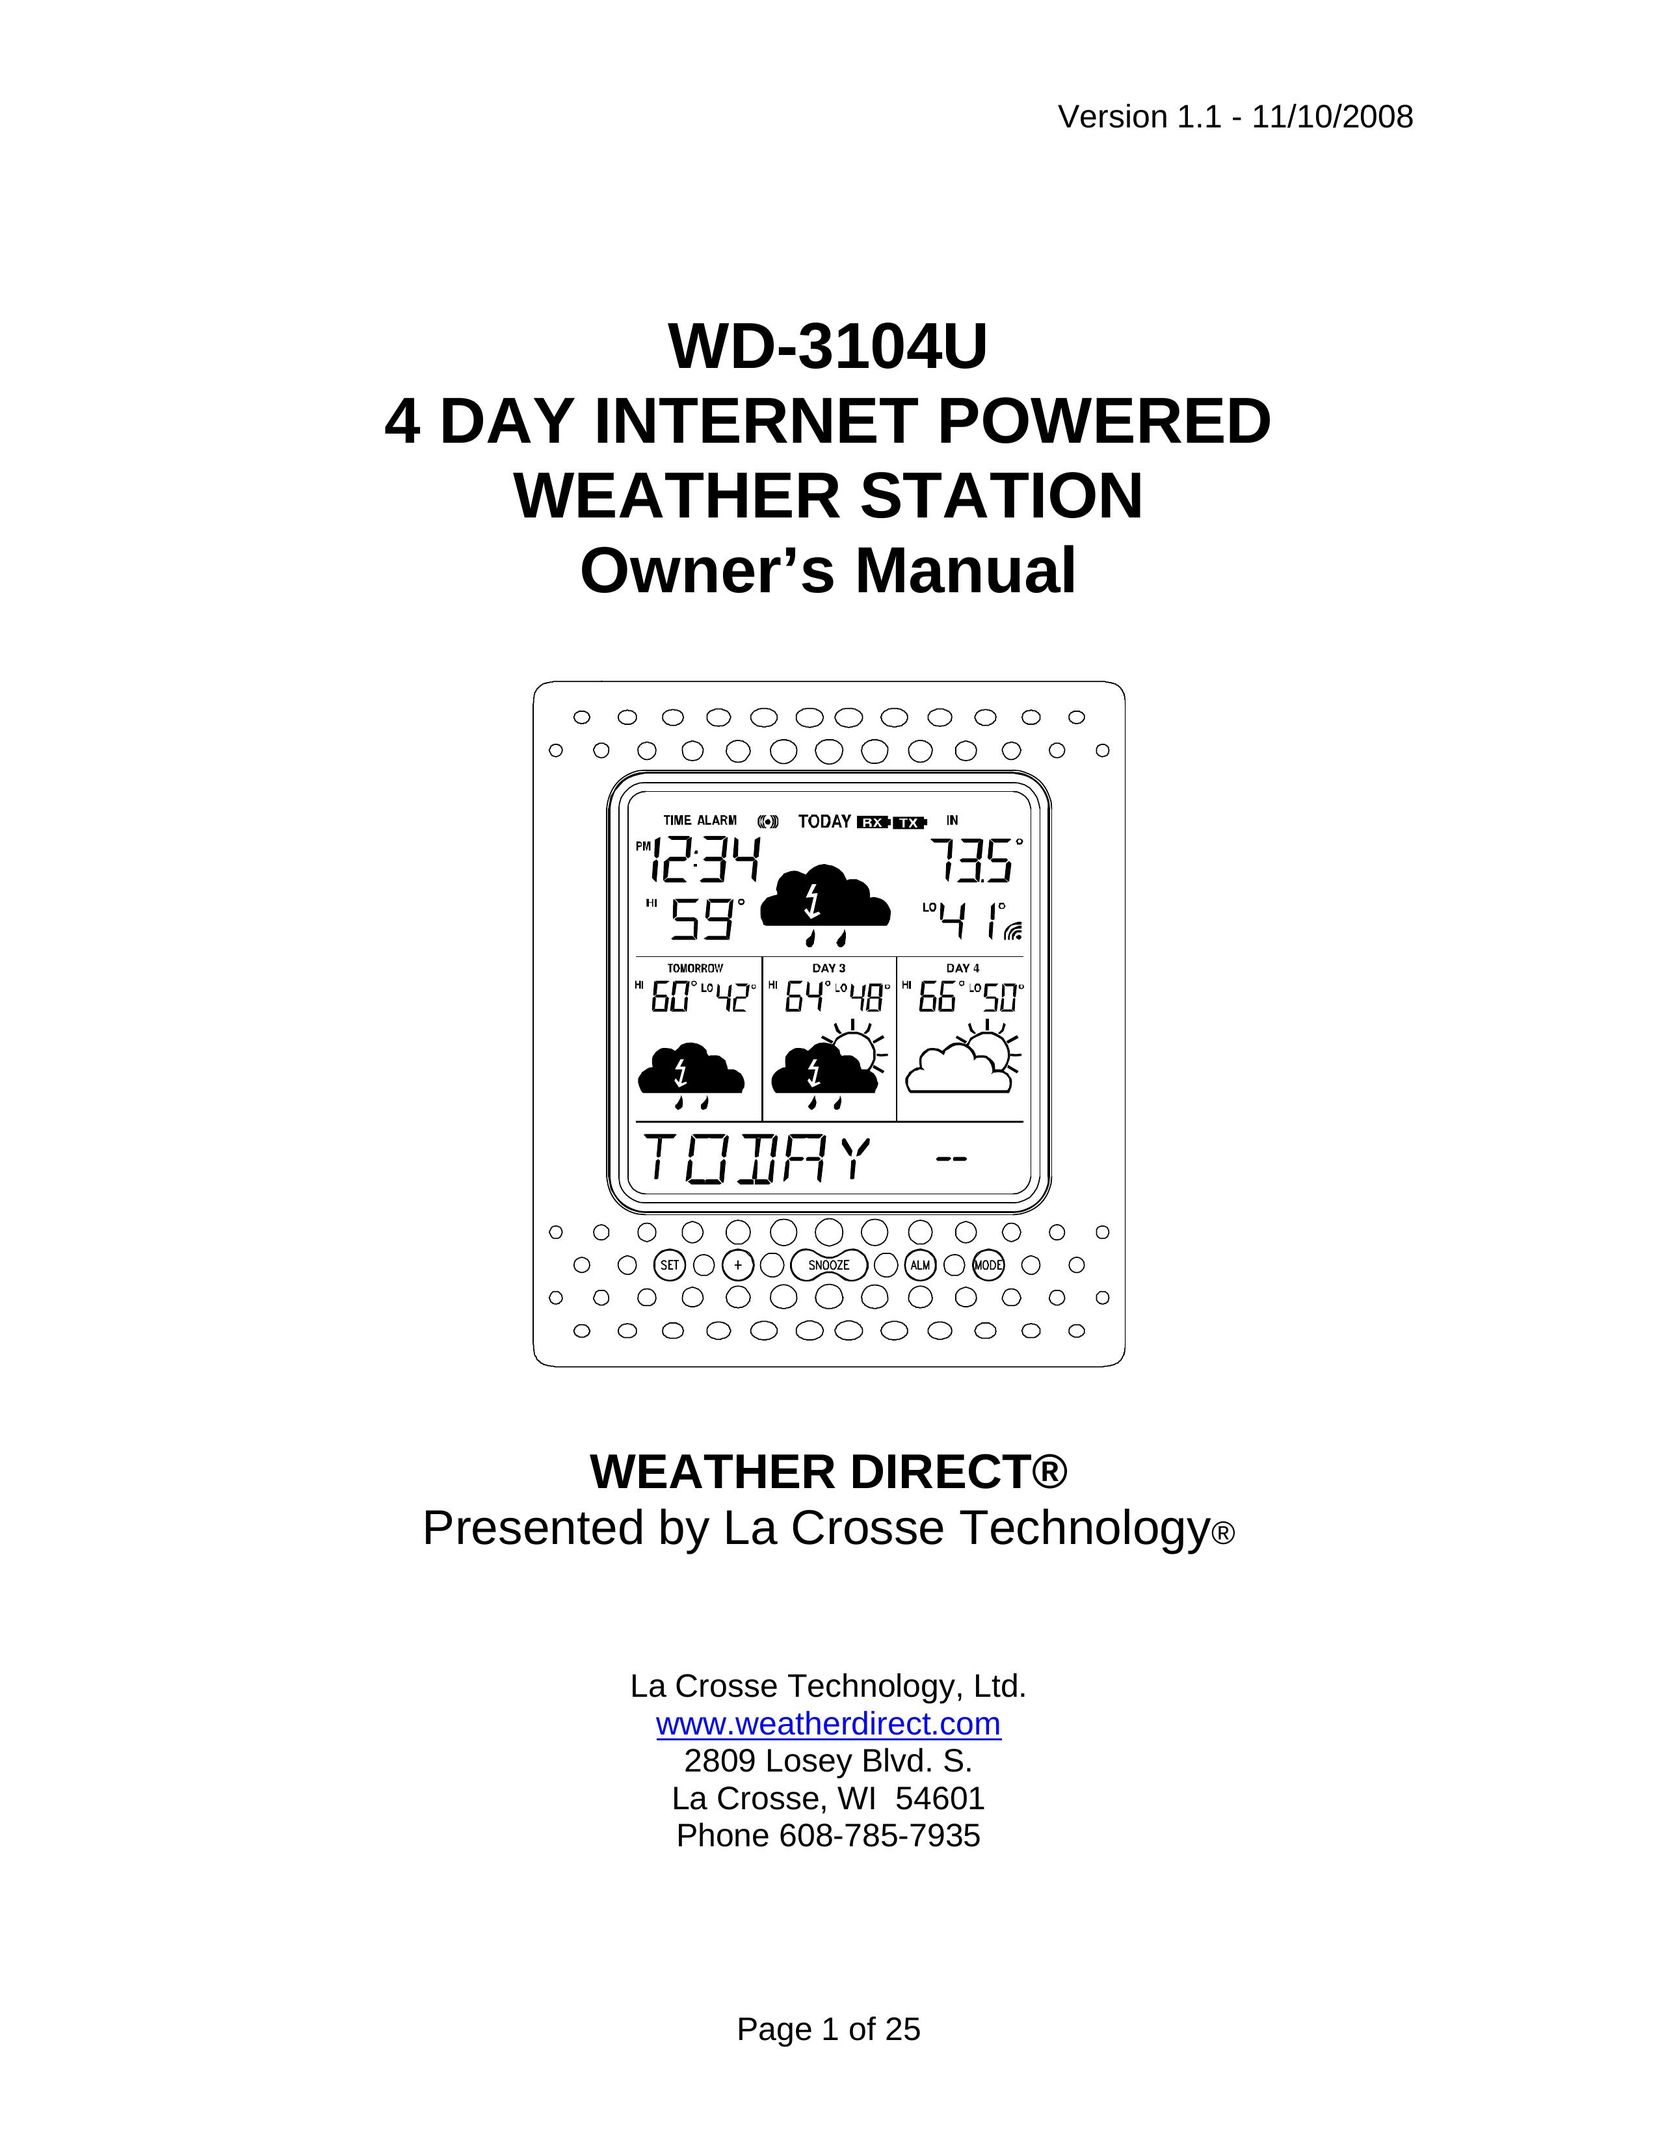 La Crosse Technology WD-3104U Portable Radio User Manual